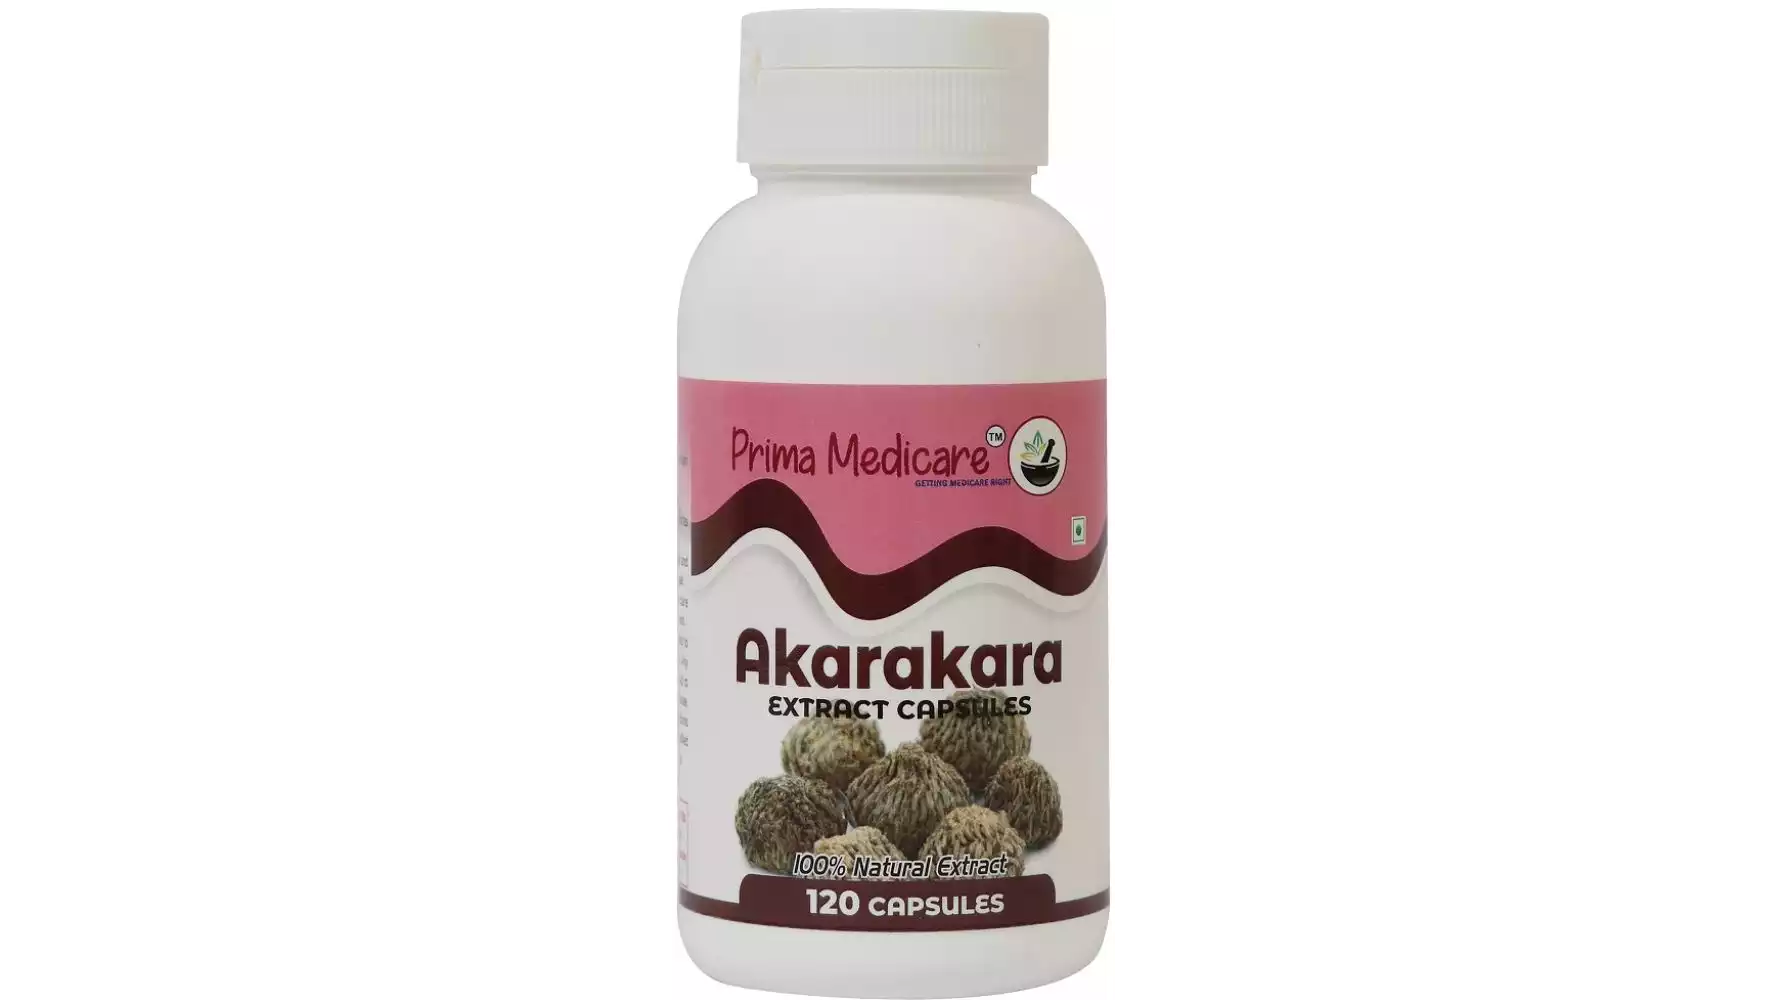 Prima Medicare Akarakara Extract Capsules (120caps)